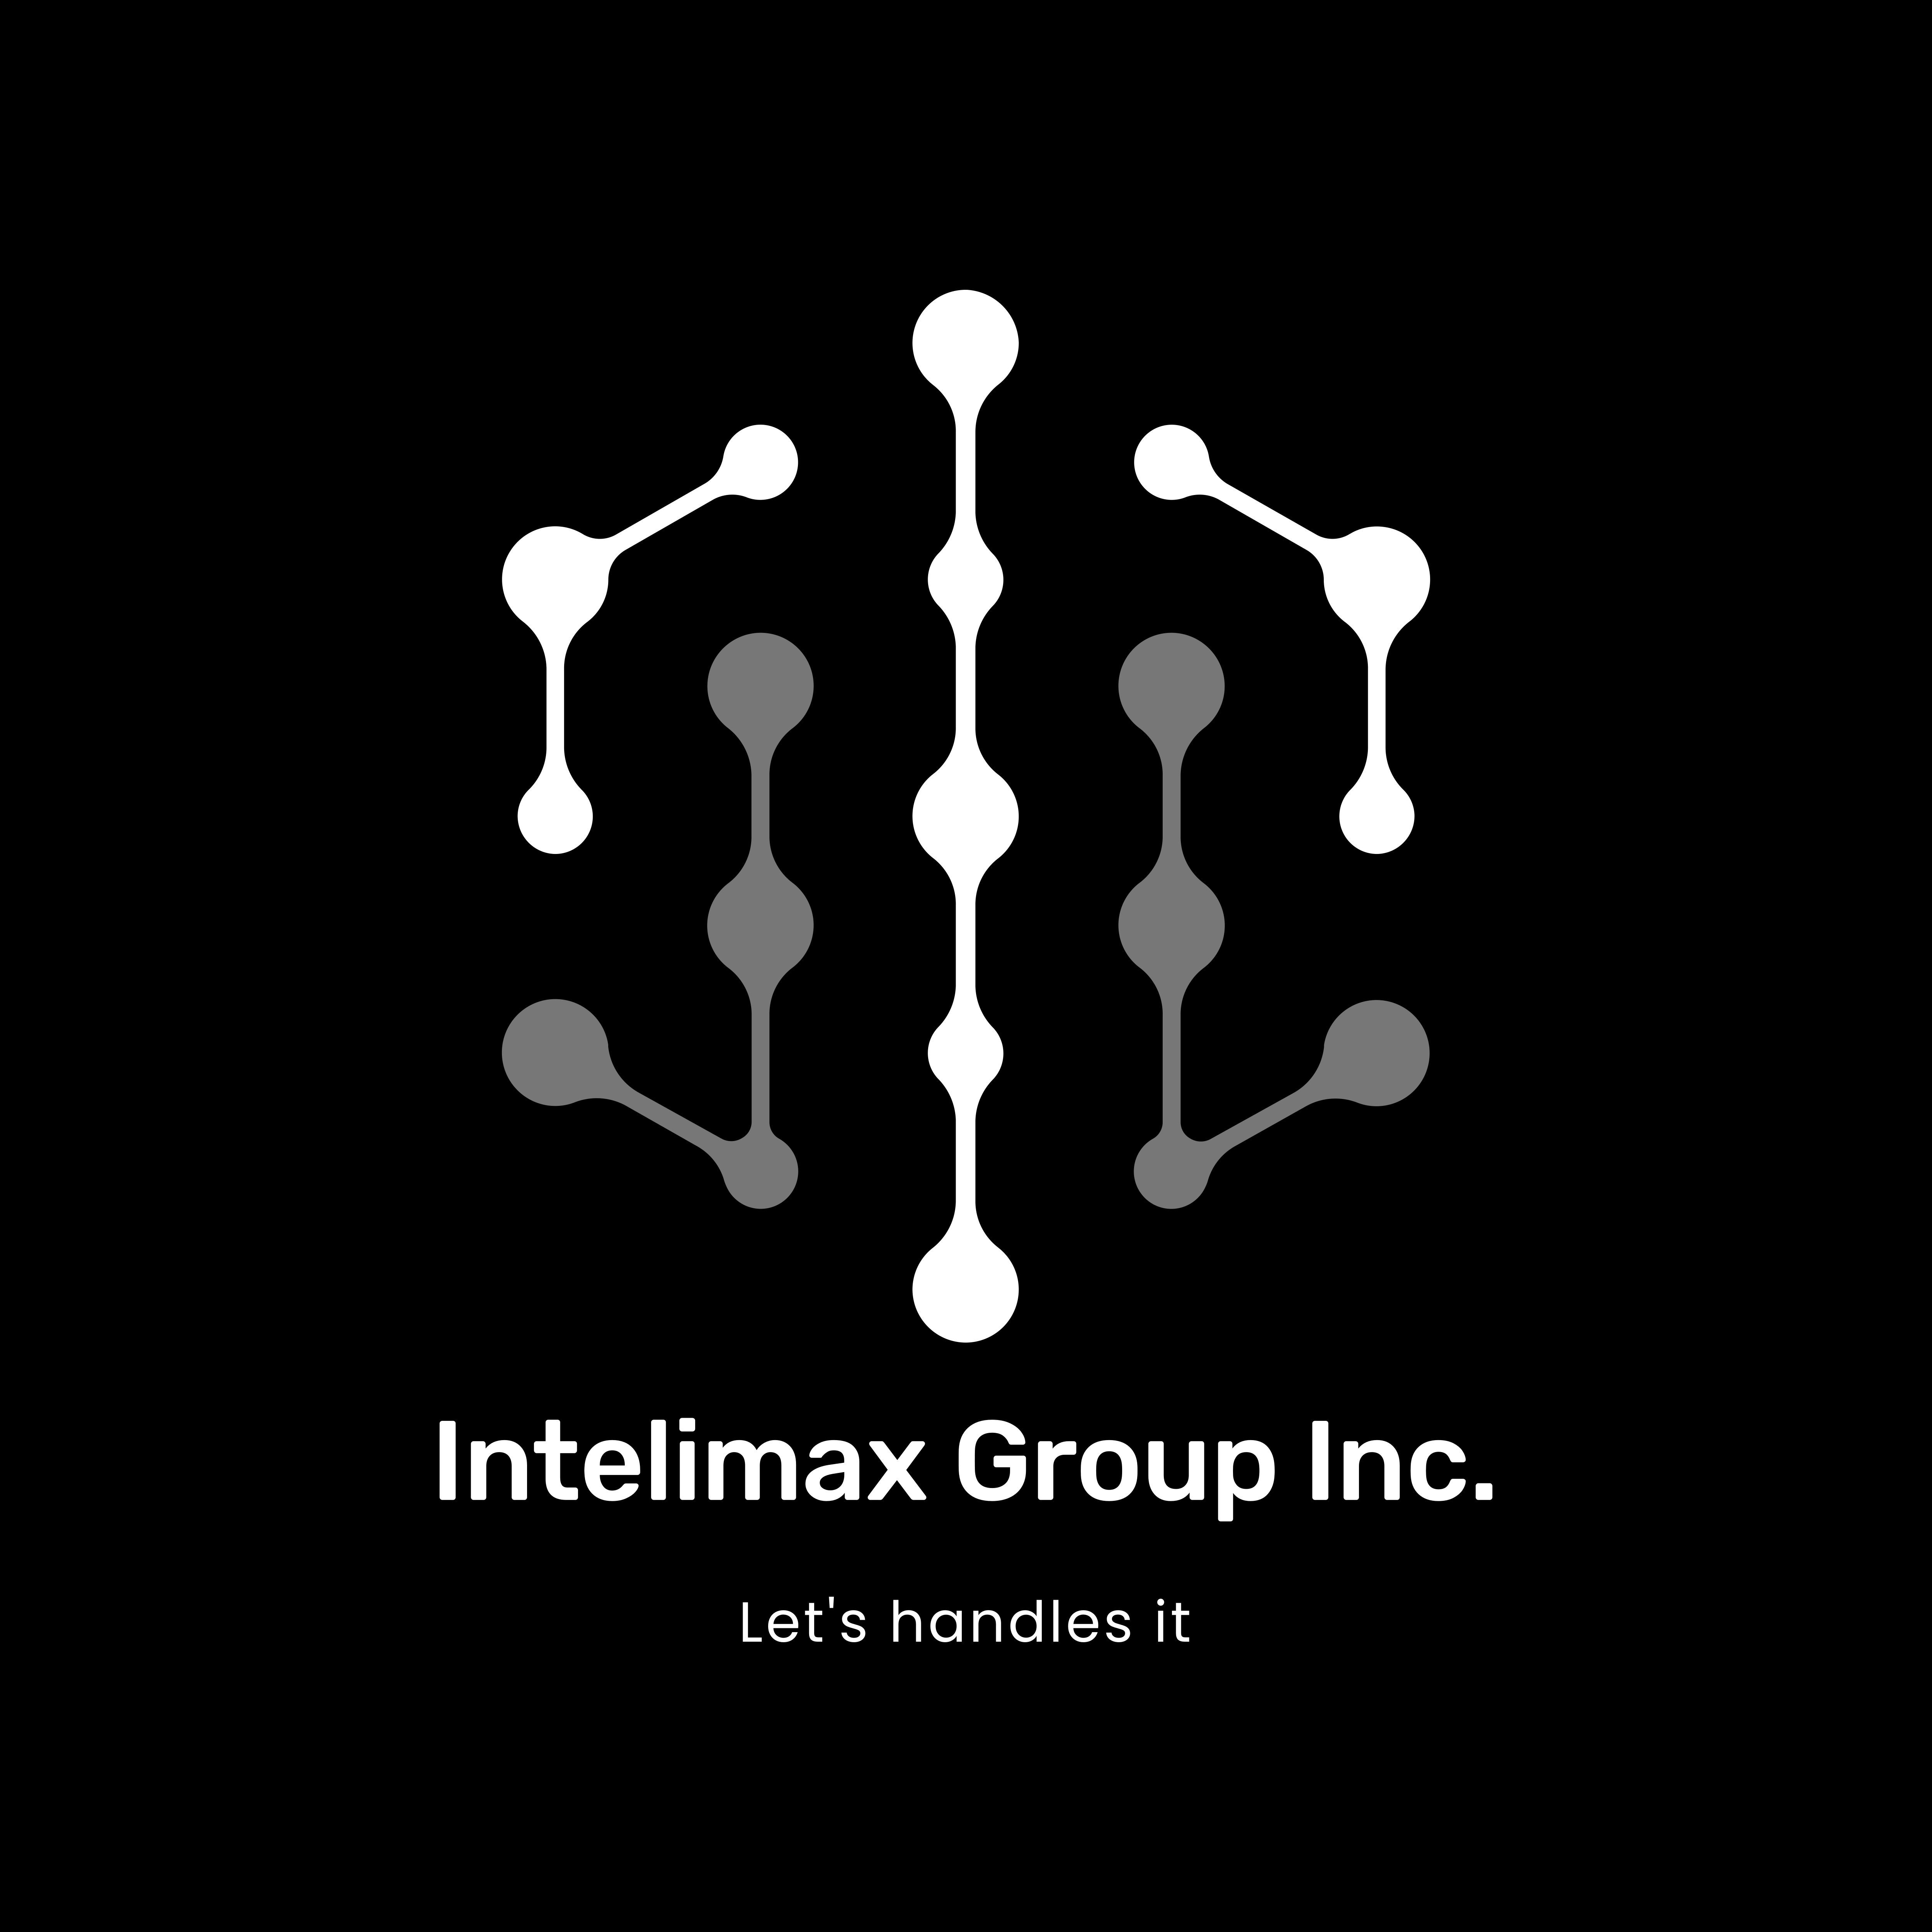 Intelimax Group Inc